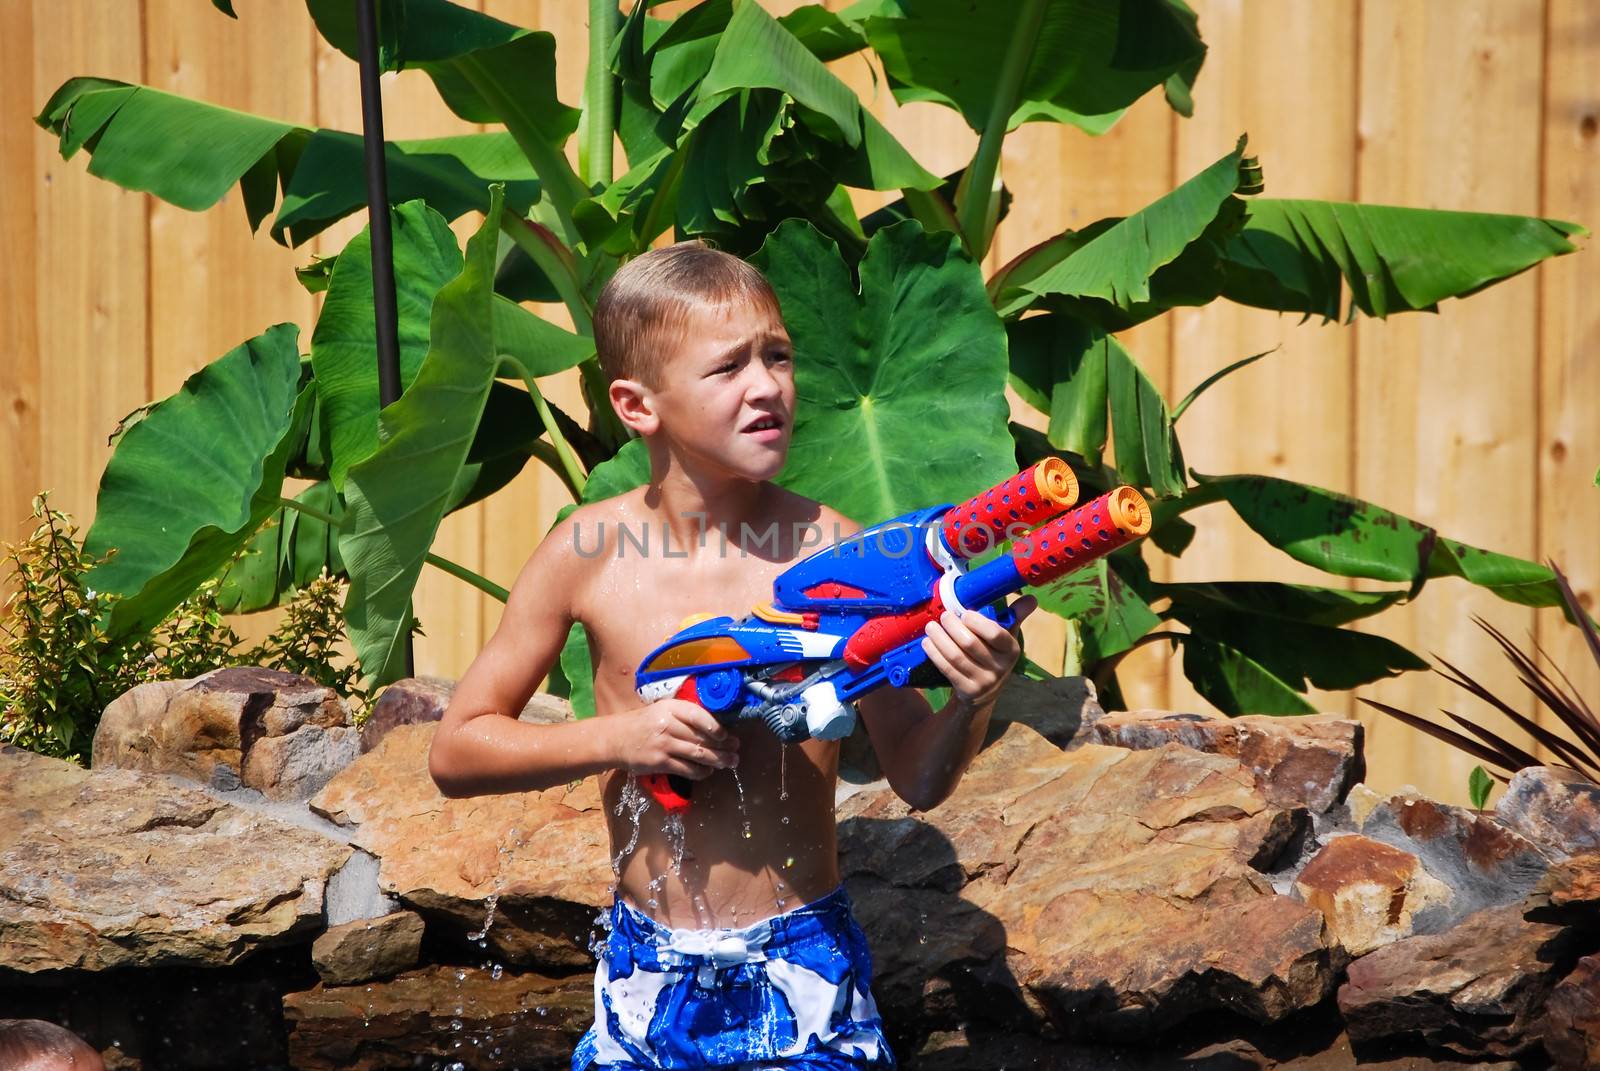 Cute young boy in swimming pool with water gun.